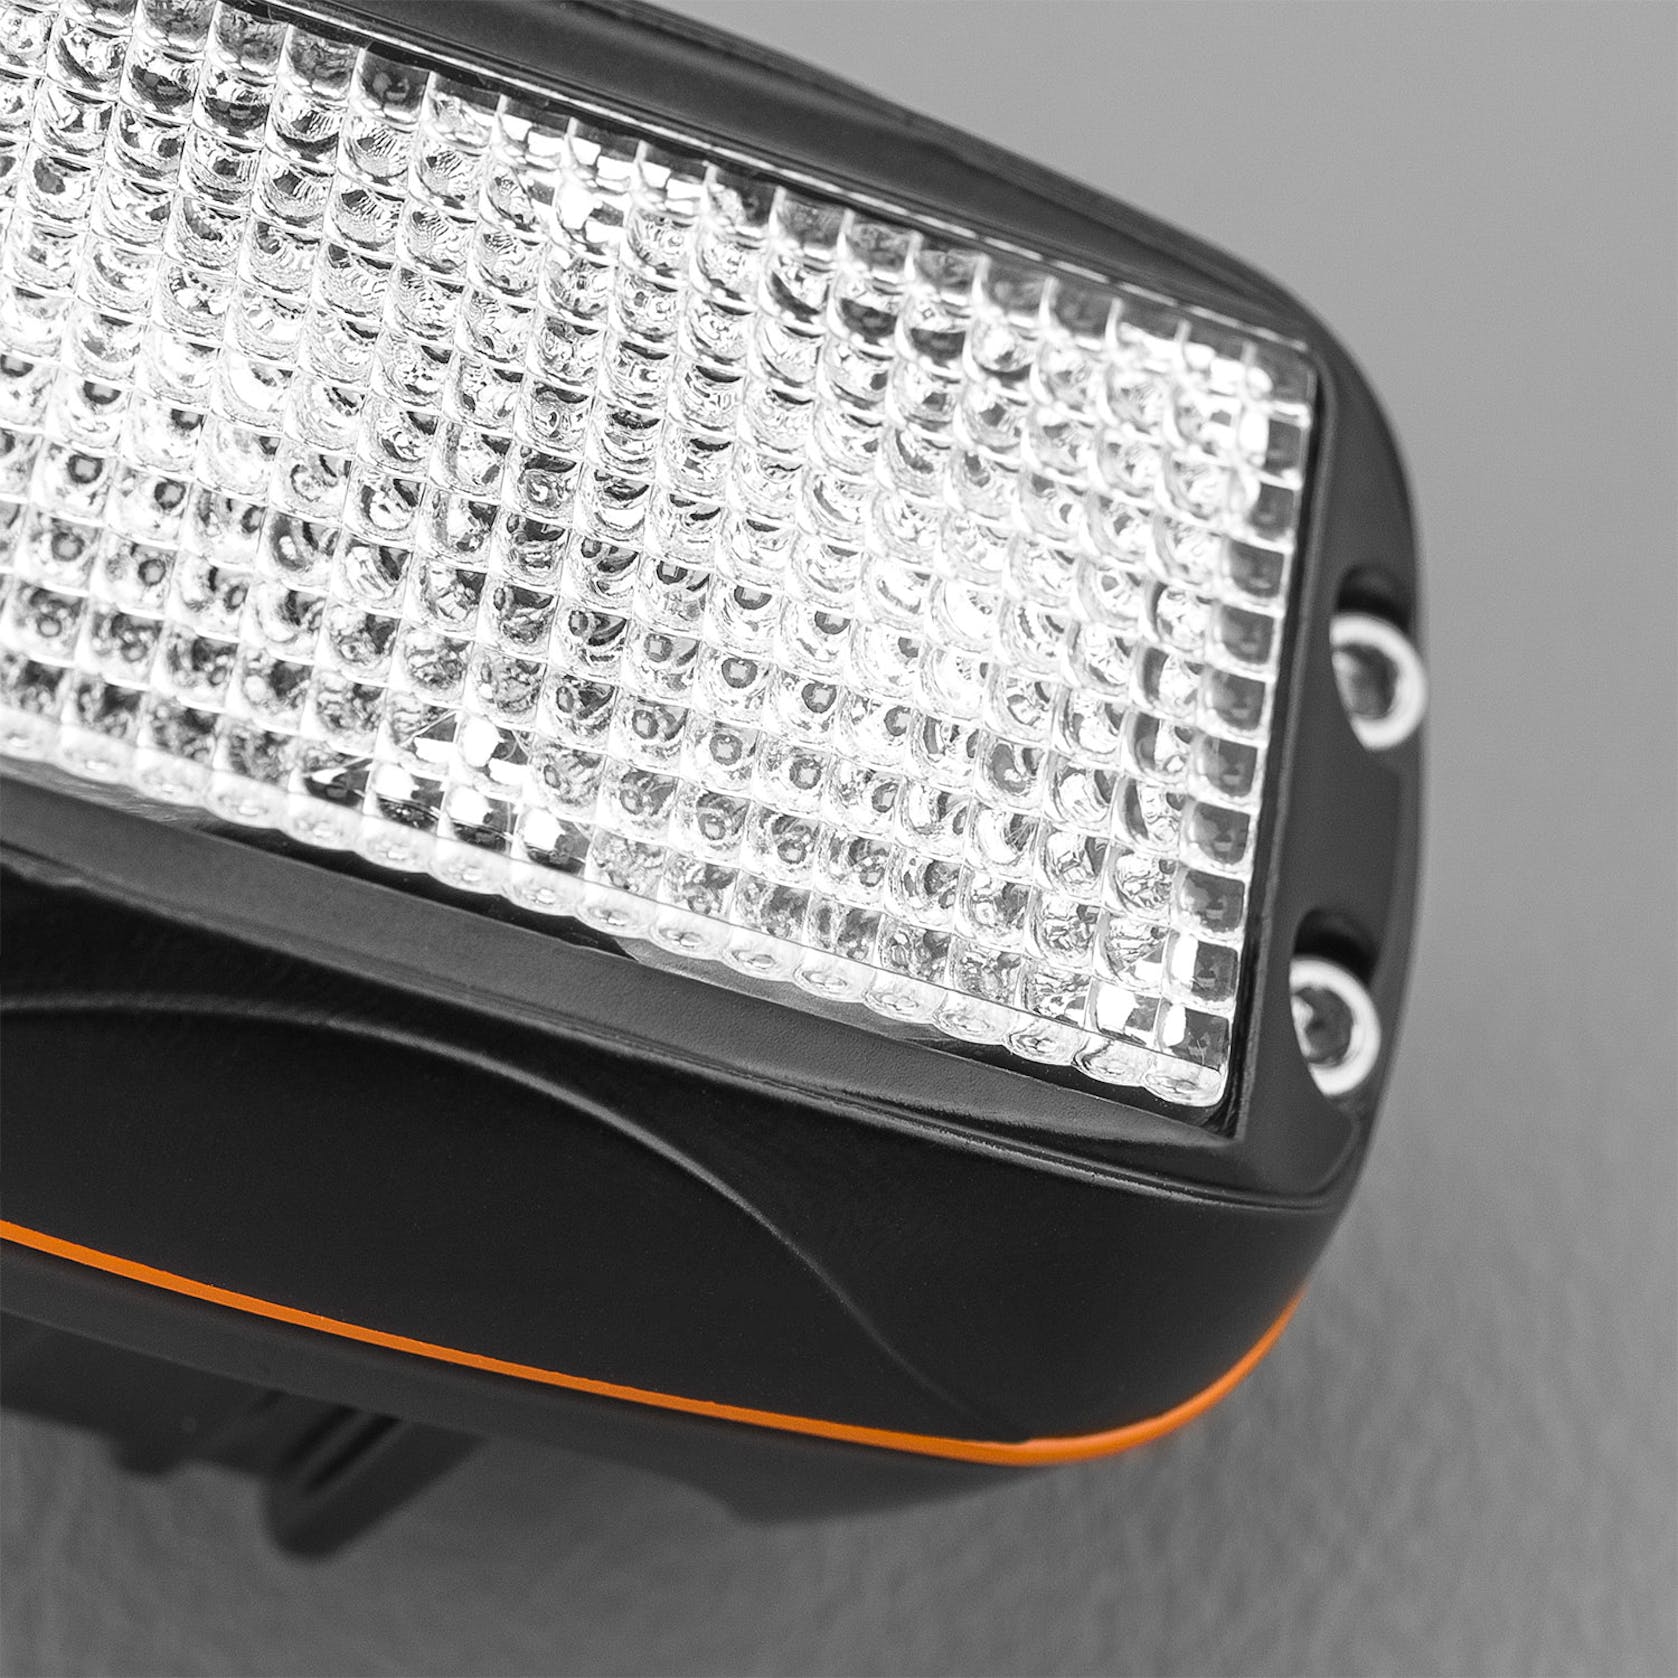 STEDI 10W Mini V2 LED Flood Light - Warmweiß/Amber